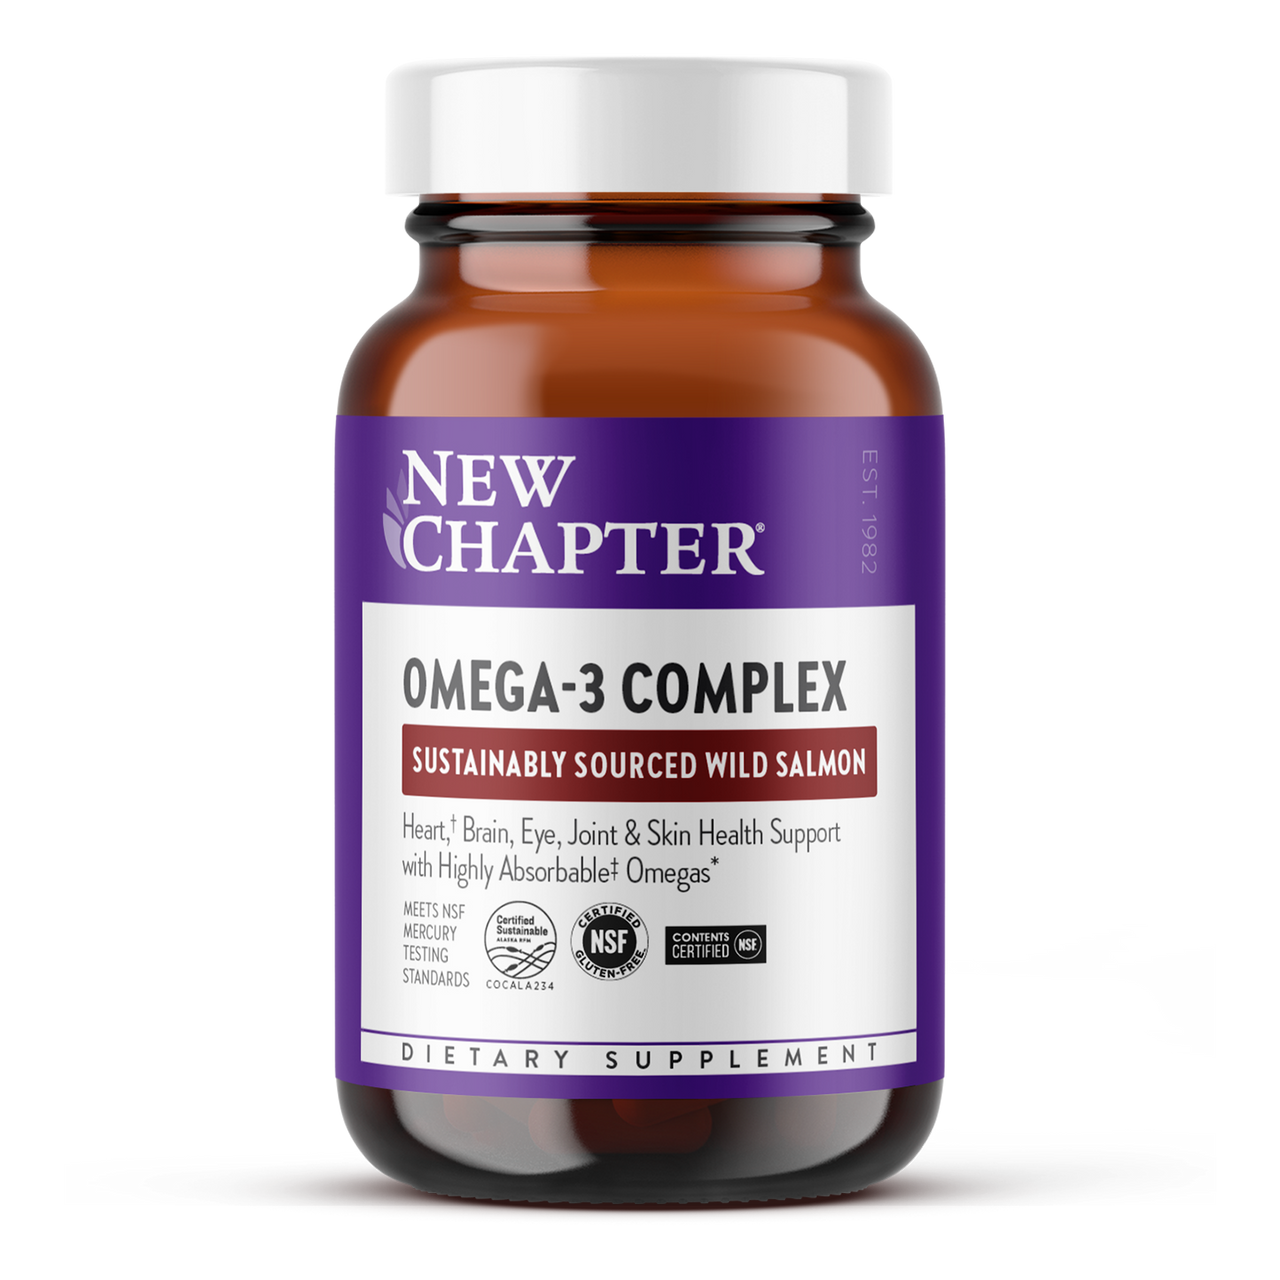 Omega-3 Complex